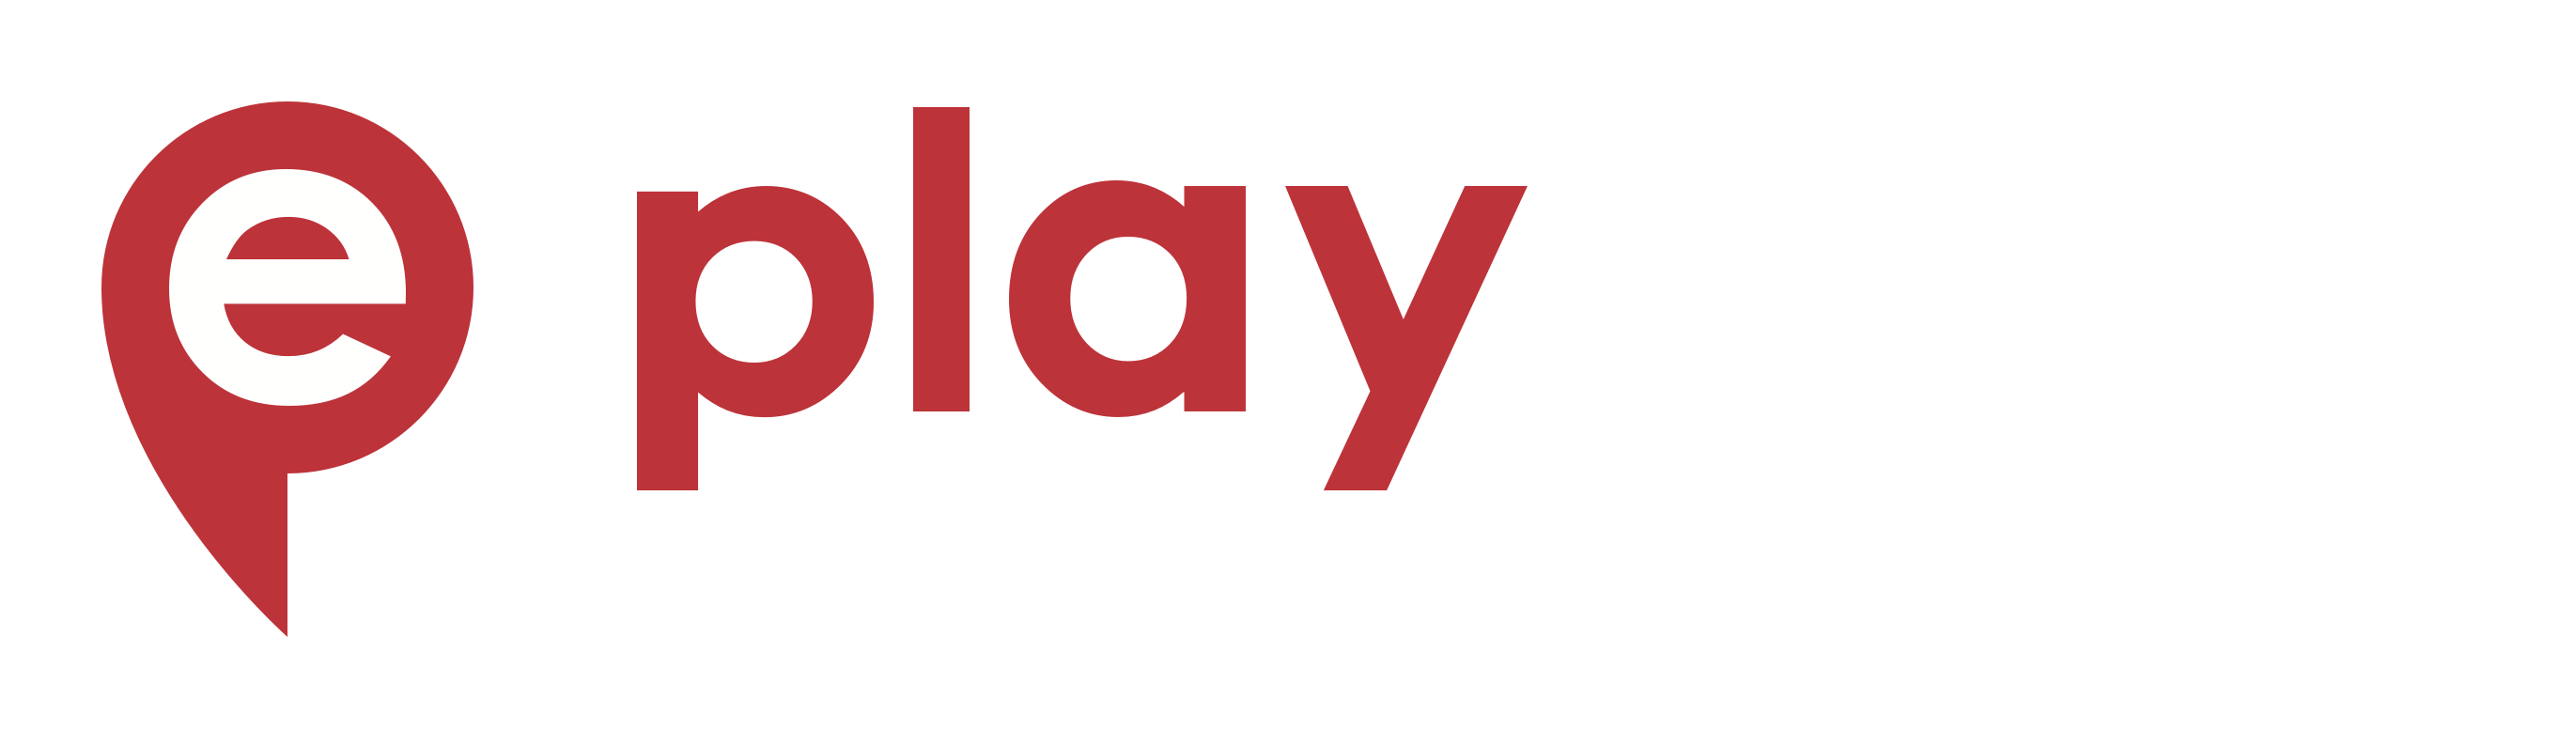 playeasy logo